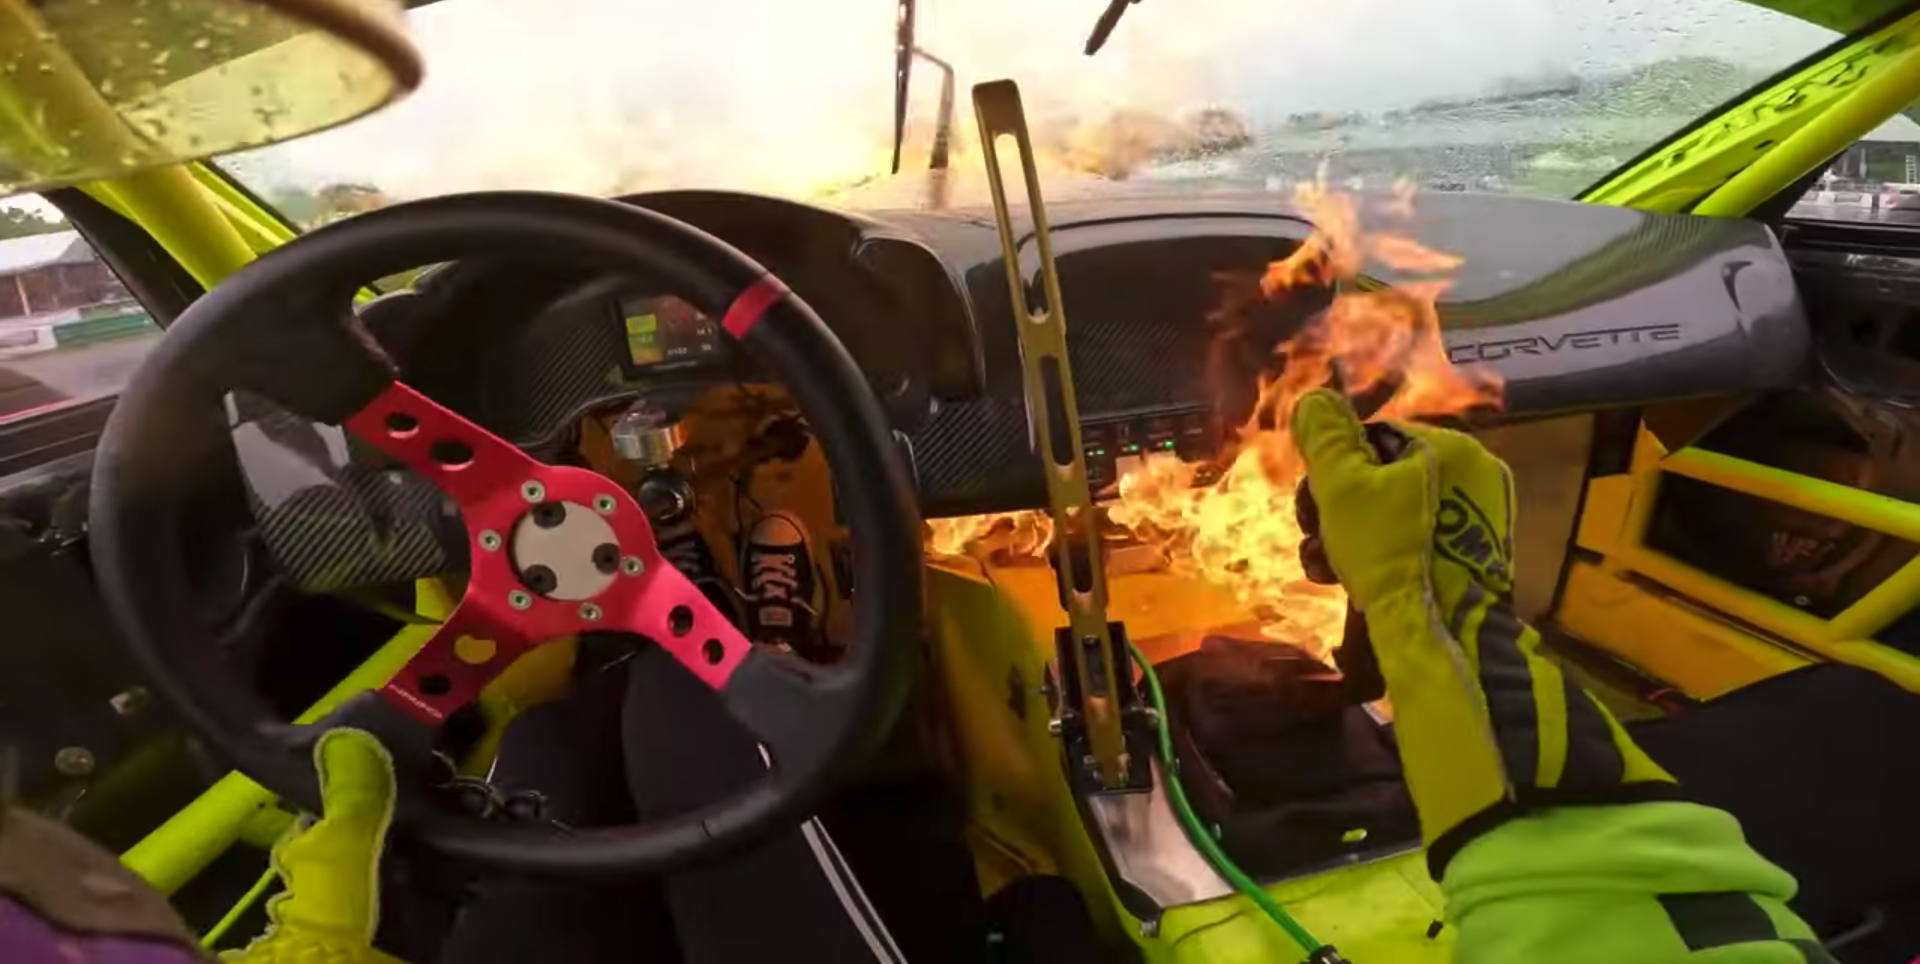 What It's Like Inside a Burning Drift Car